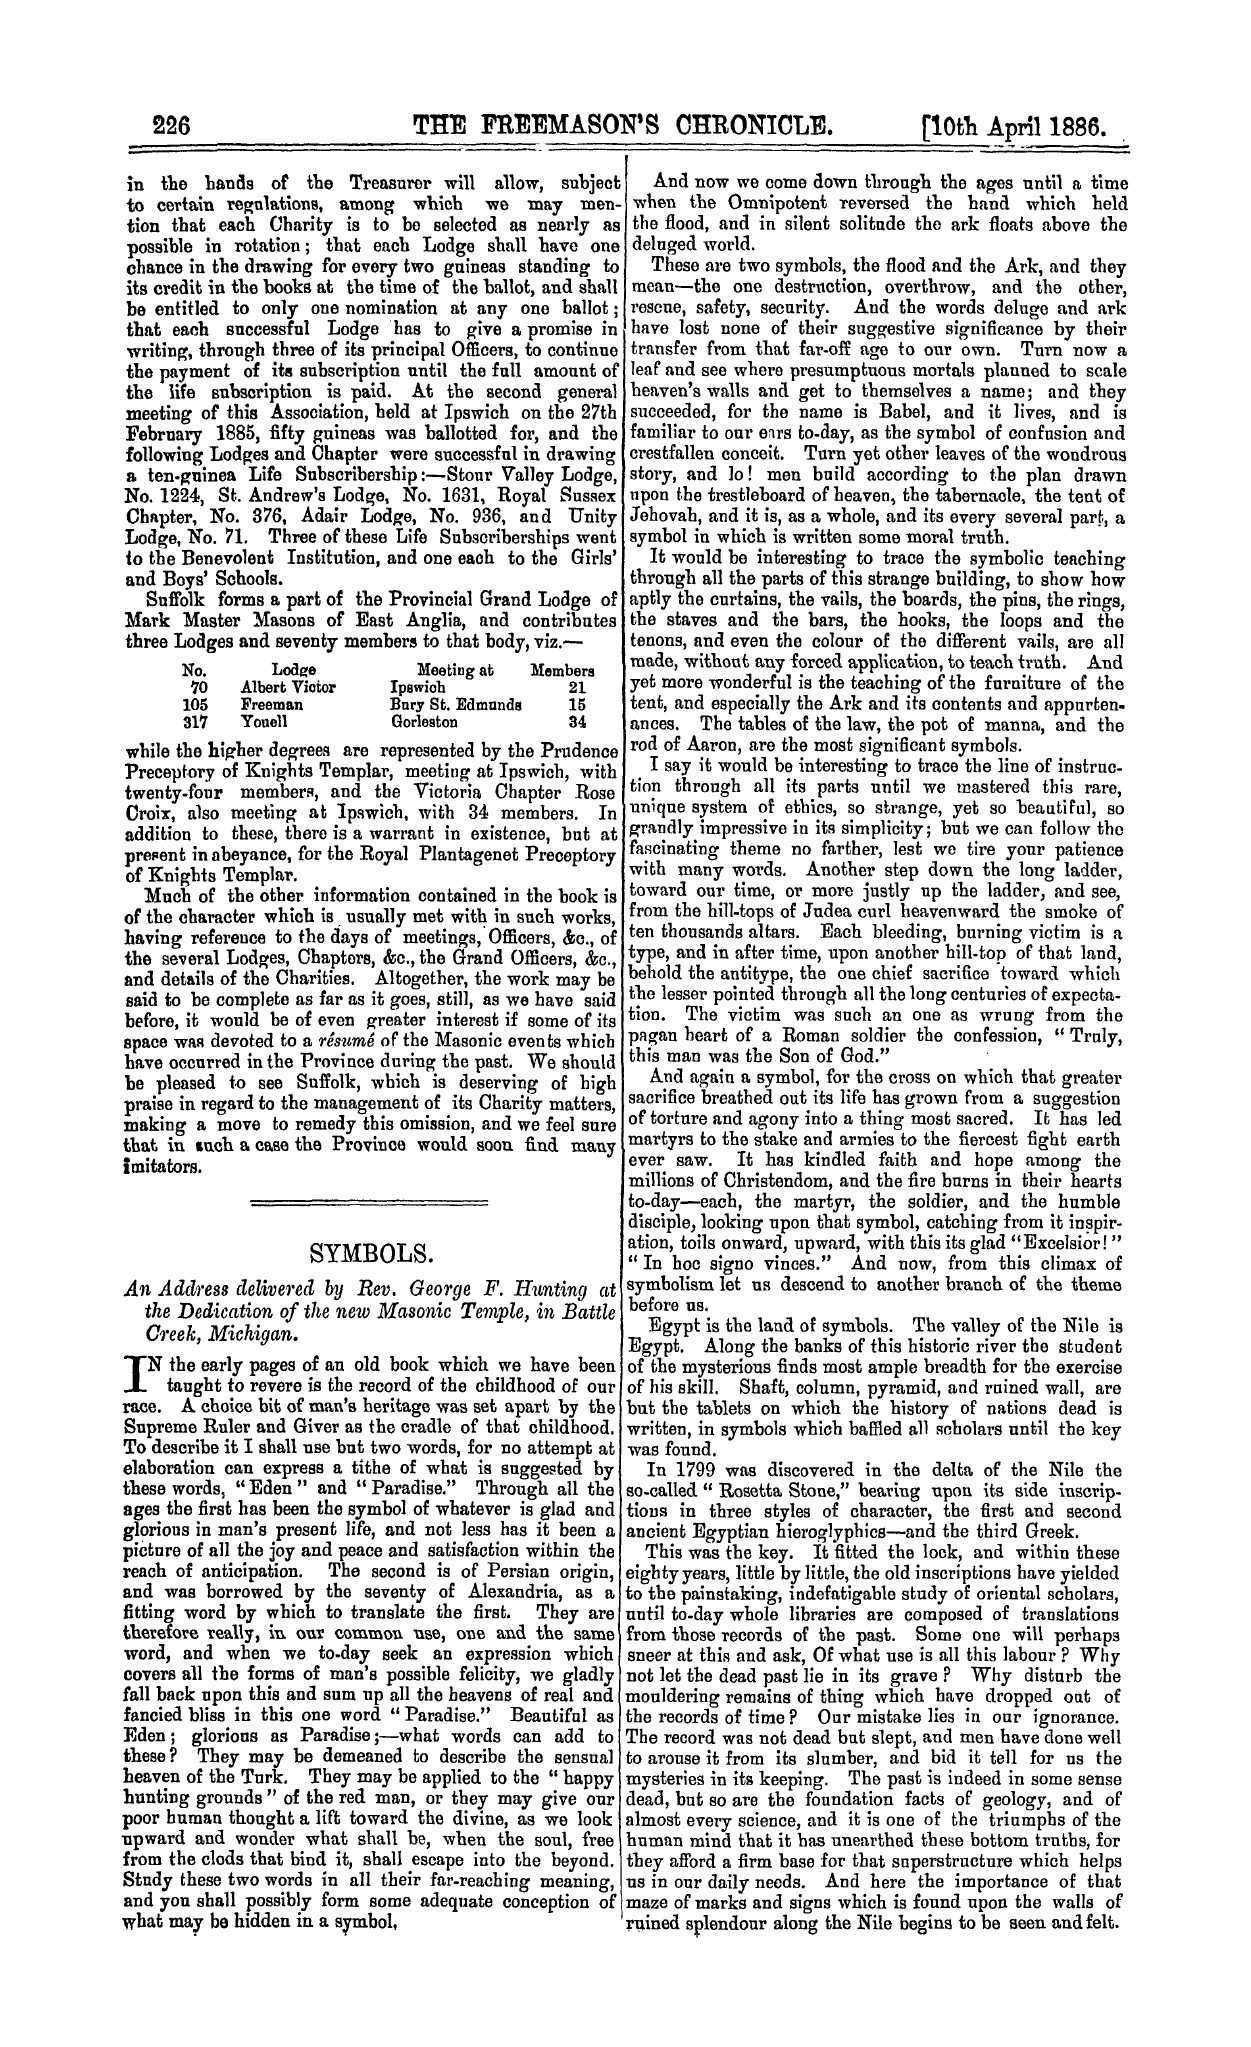 The Freemason's Chronicle: 1886-04-10 - Freemasonry In Suffolk.